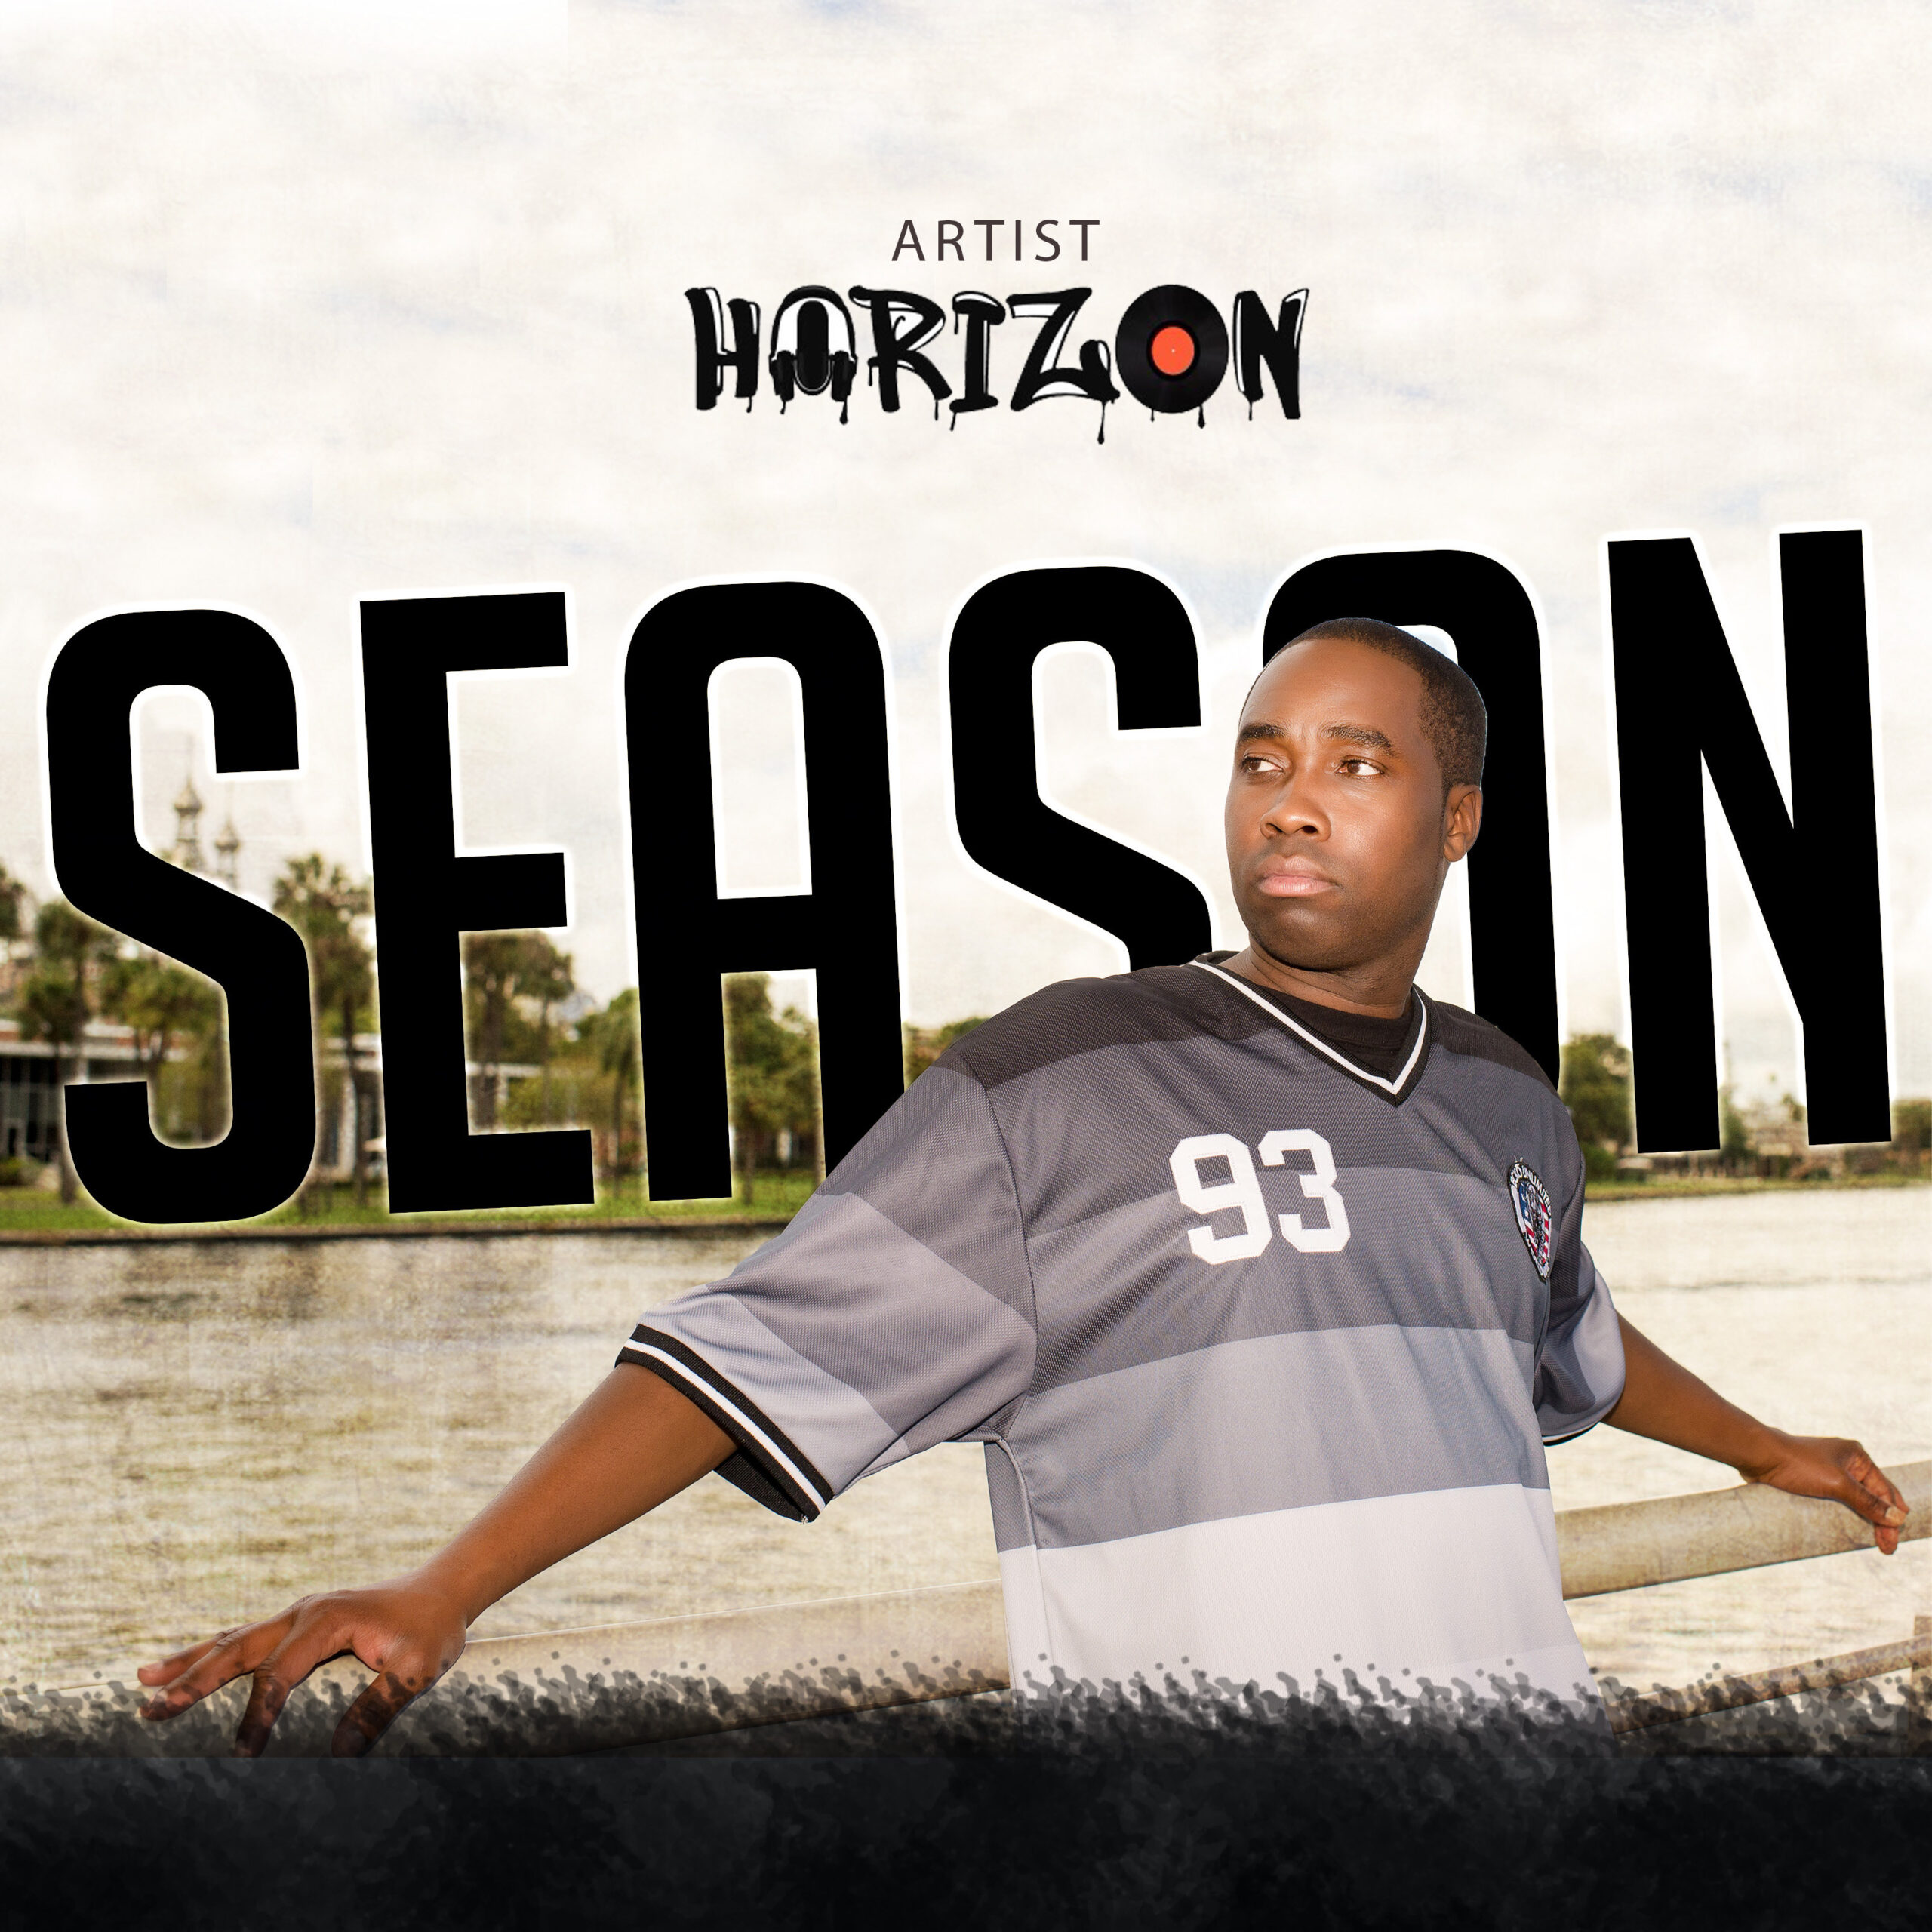 Horizon (@horizon_artist) – “Season” (Video)